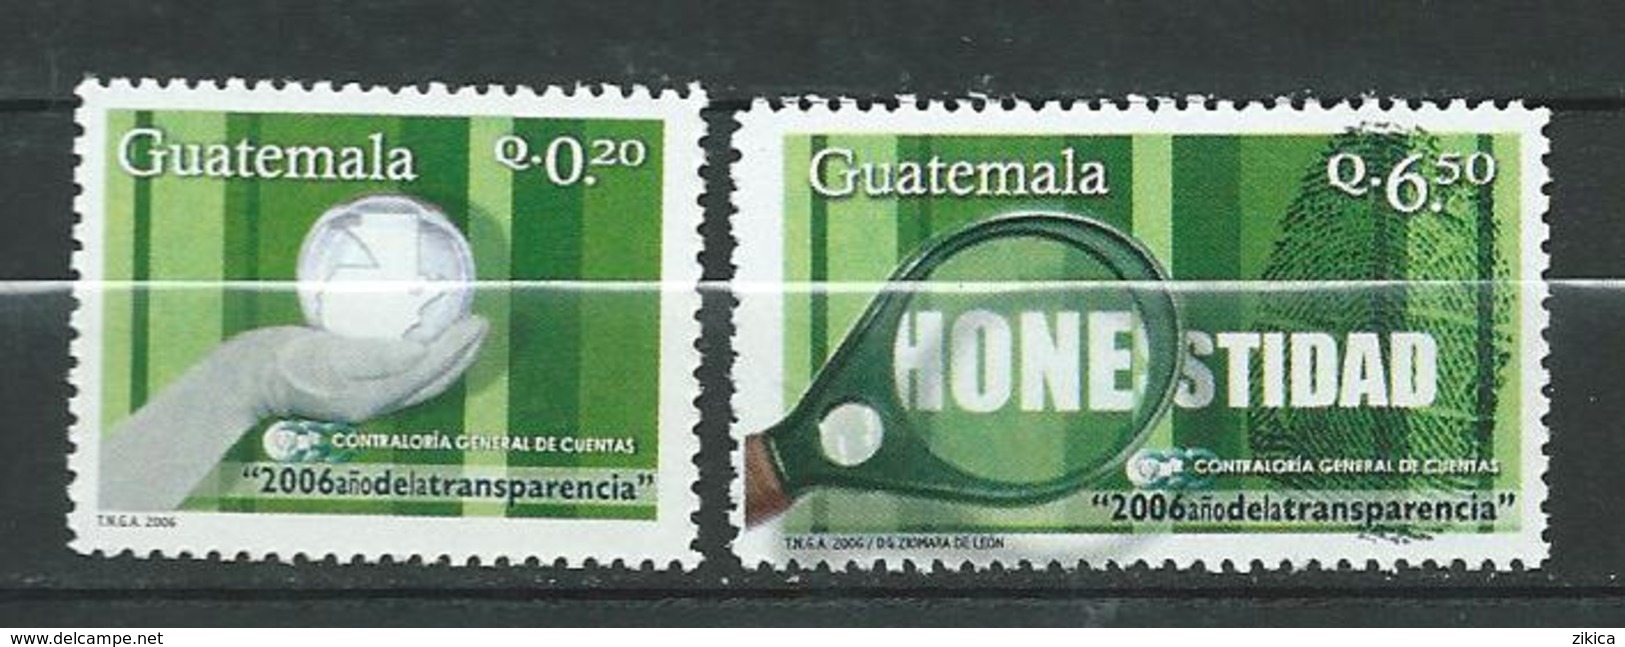 Guatemala 2007 In 2006, The Year Of Transparency.MNH - Guatemala